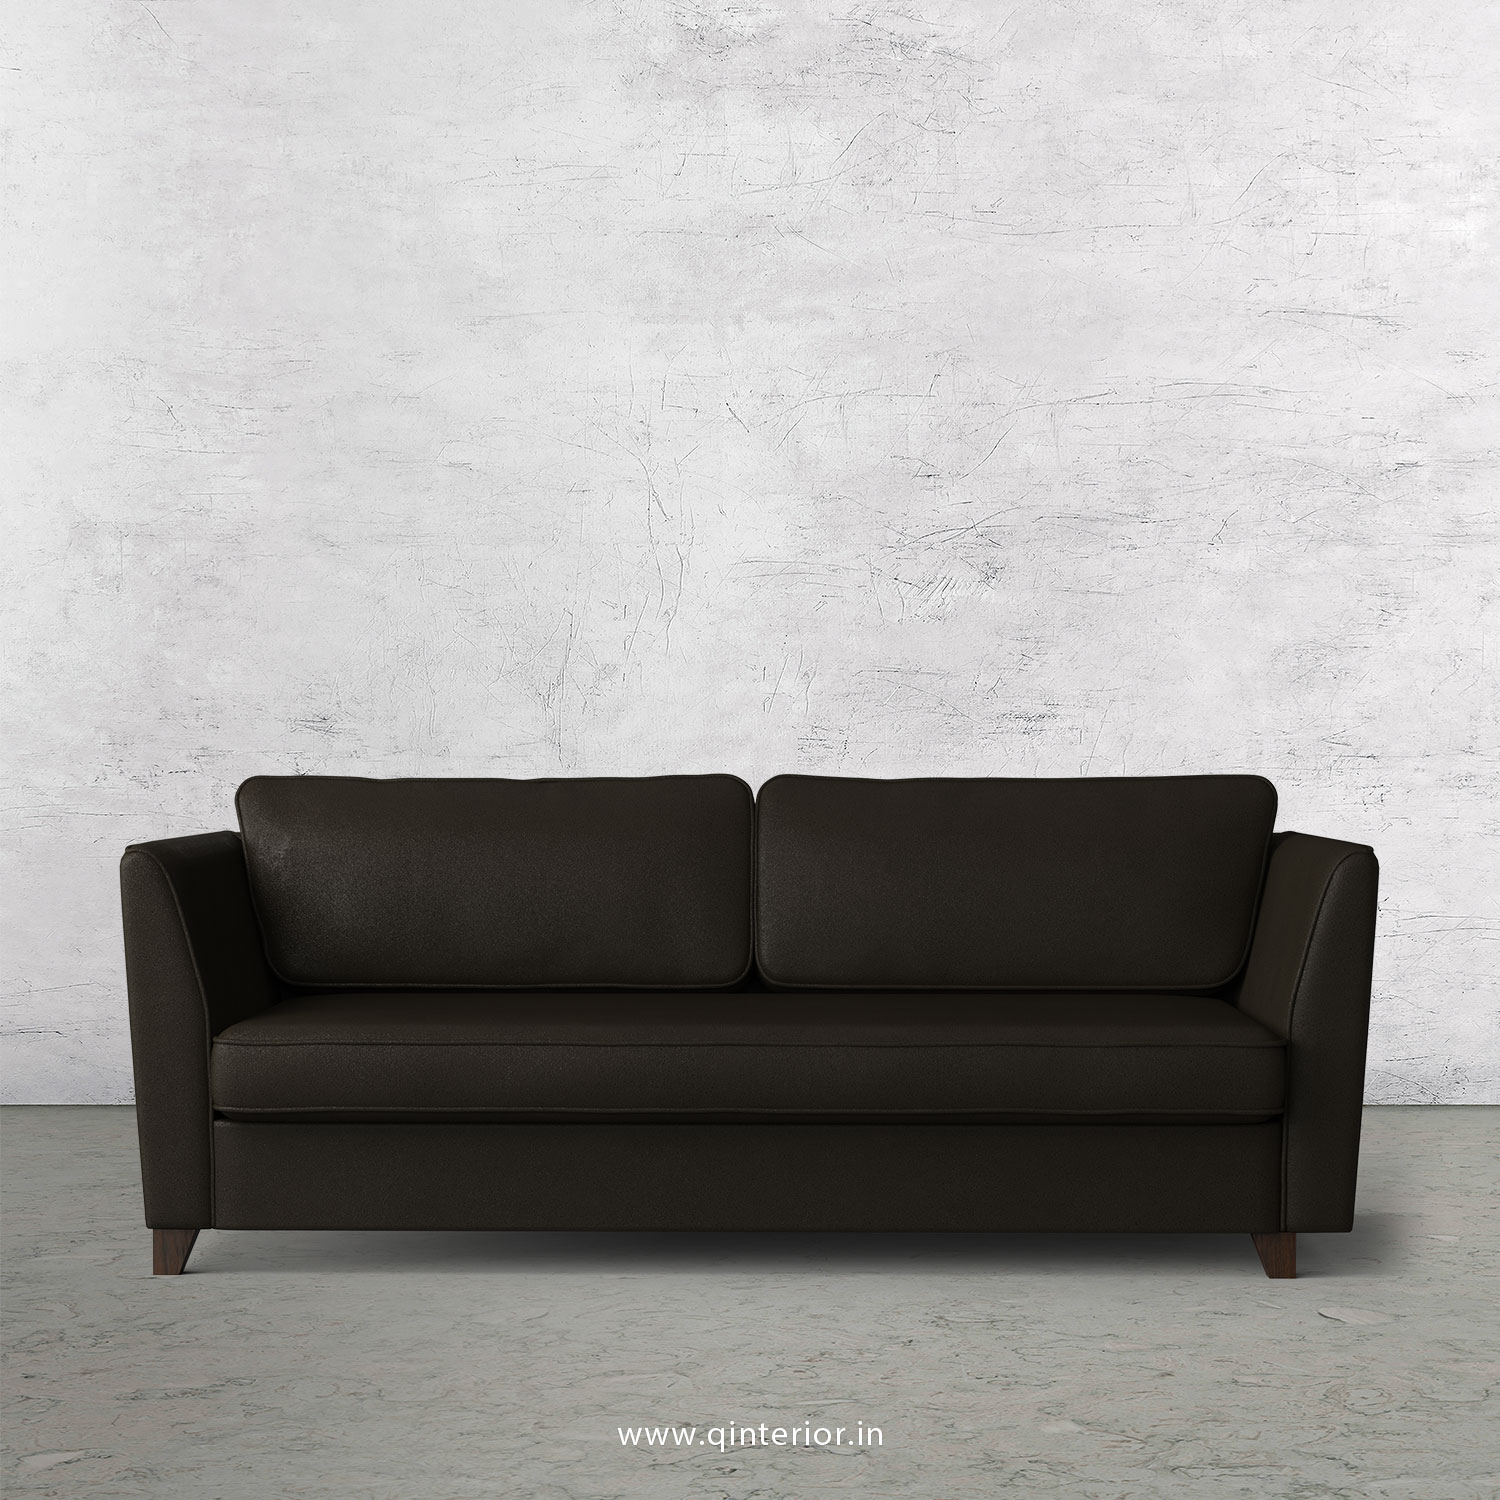 KINGSTONE 3 Seater Sofa in Fab Leather Fabric - SFA004 FL11